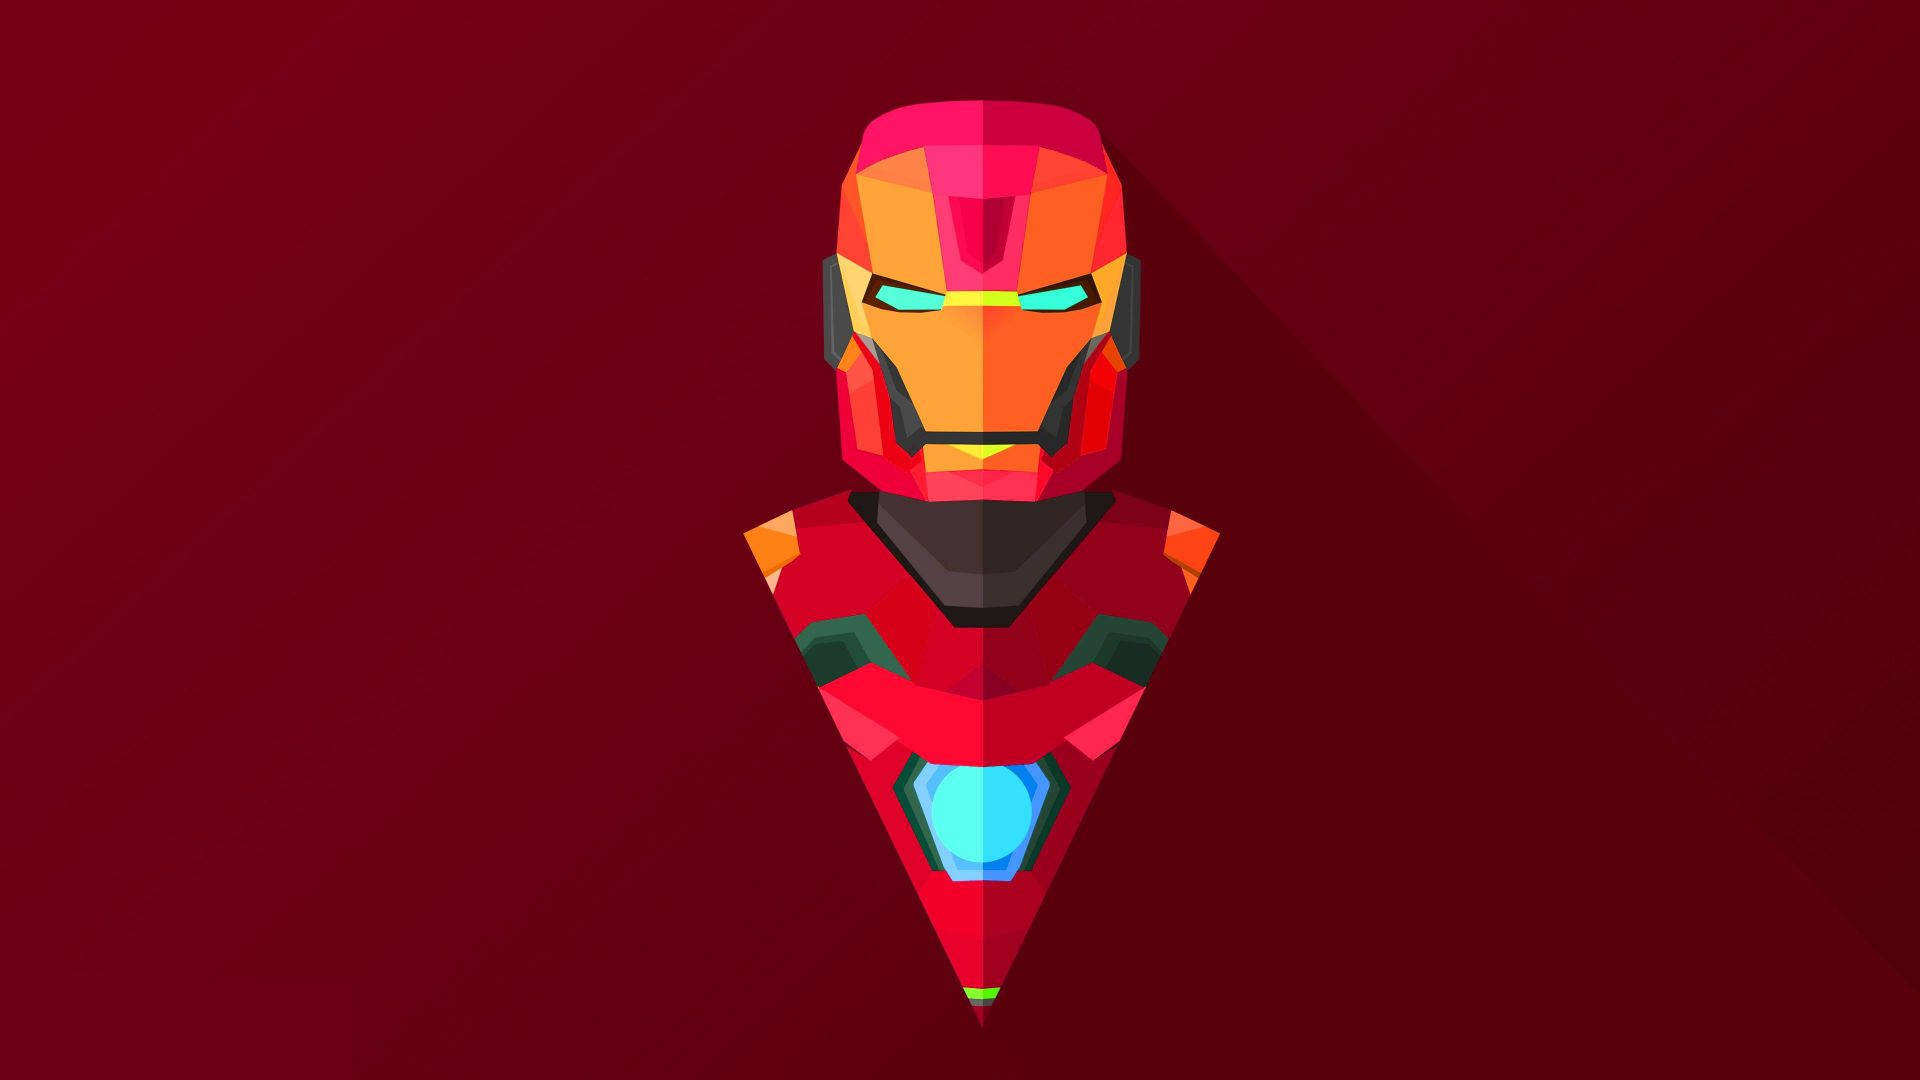 Abstract Art Iron Man Superhero Wallpaper